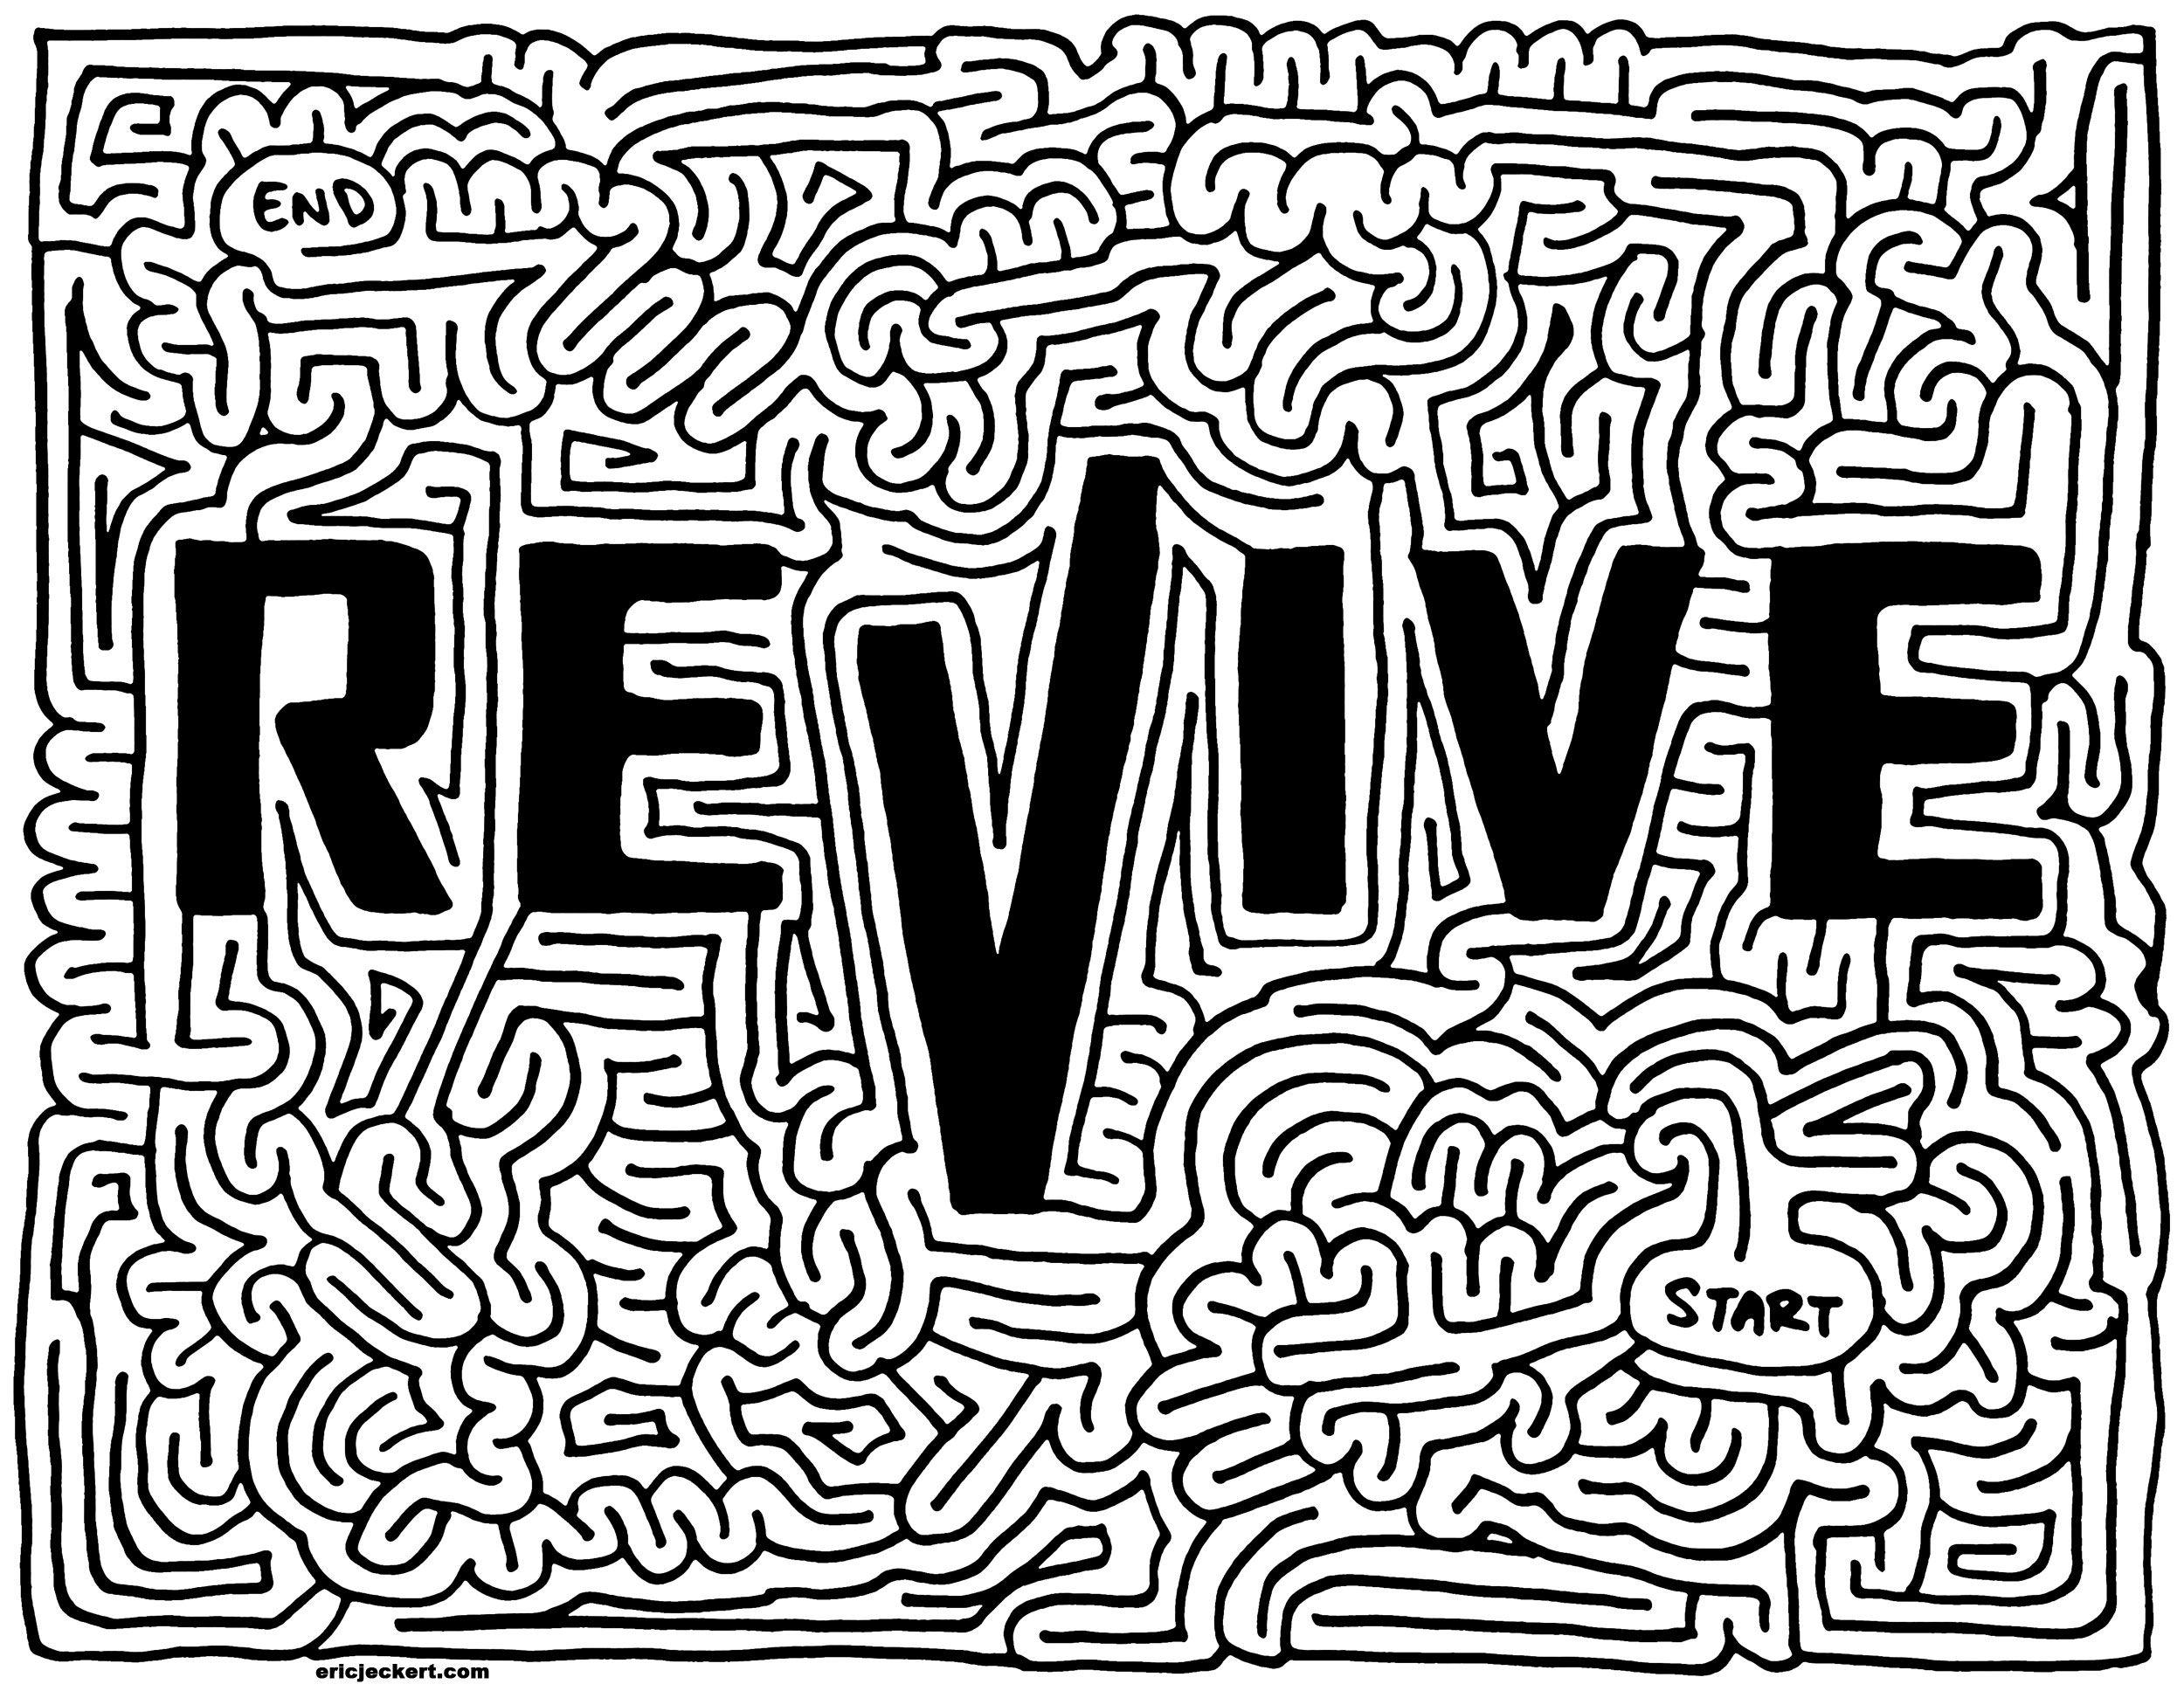 Revive Skateboards Logo - mazes » Revive Skateboards - by Eric J Eckert